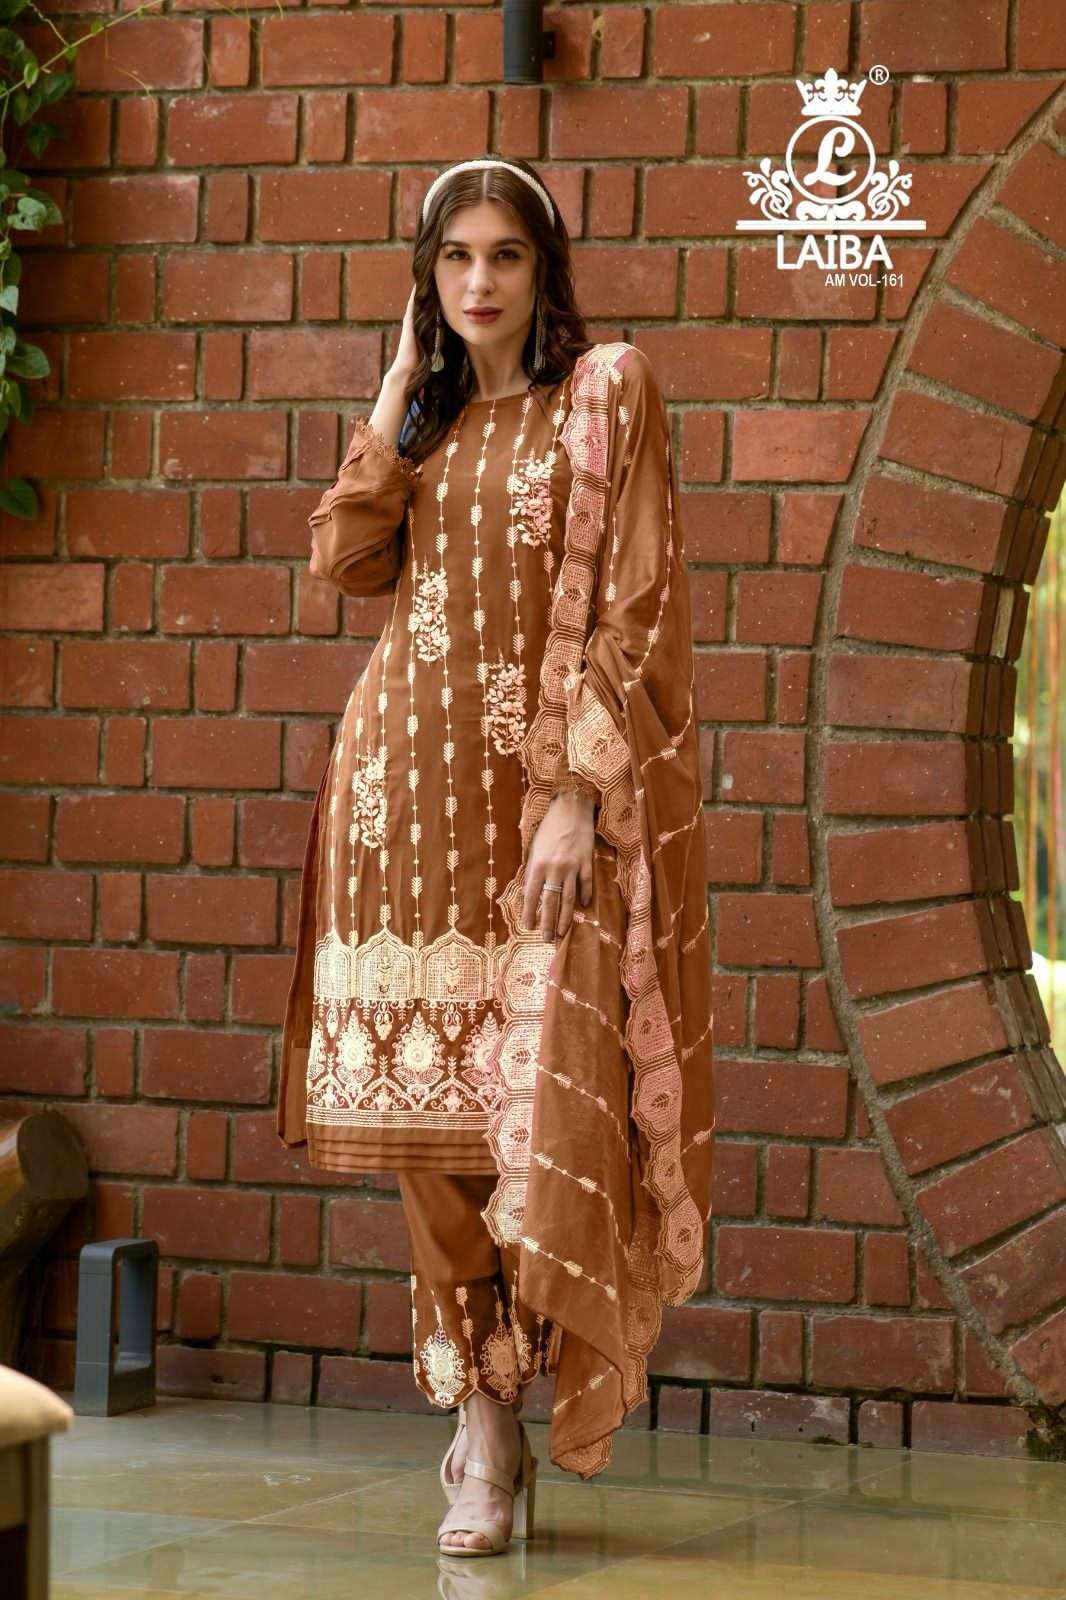 laiba am vol-161 series latest readymade pakistani salwar kameez wholesaler surat gujarat